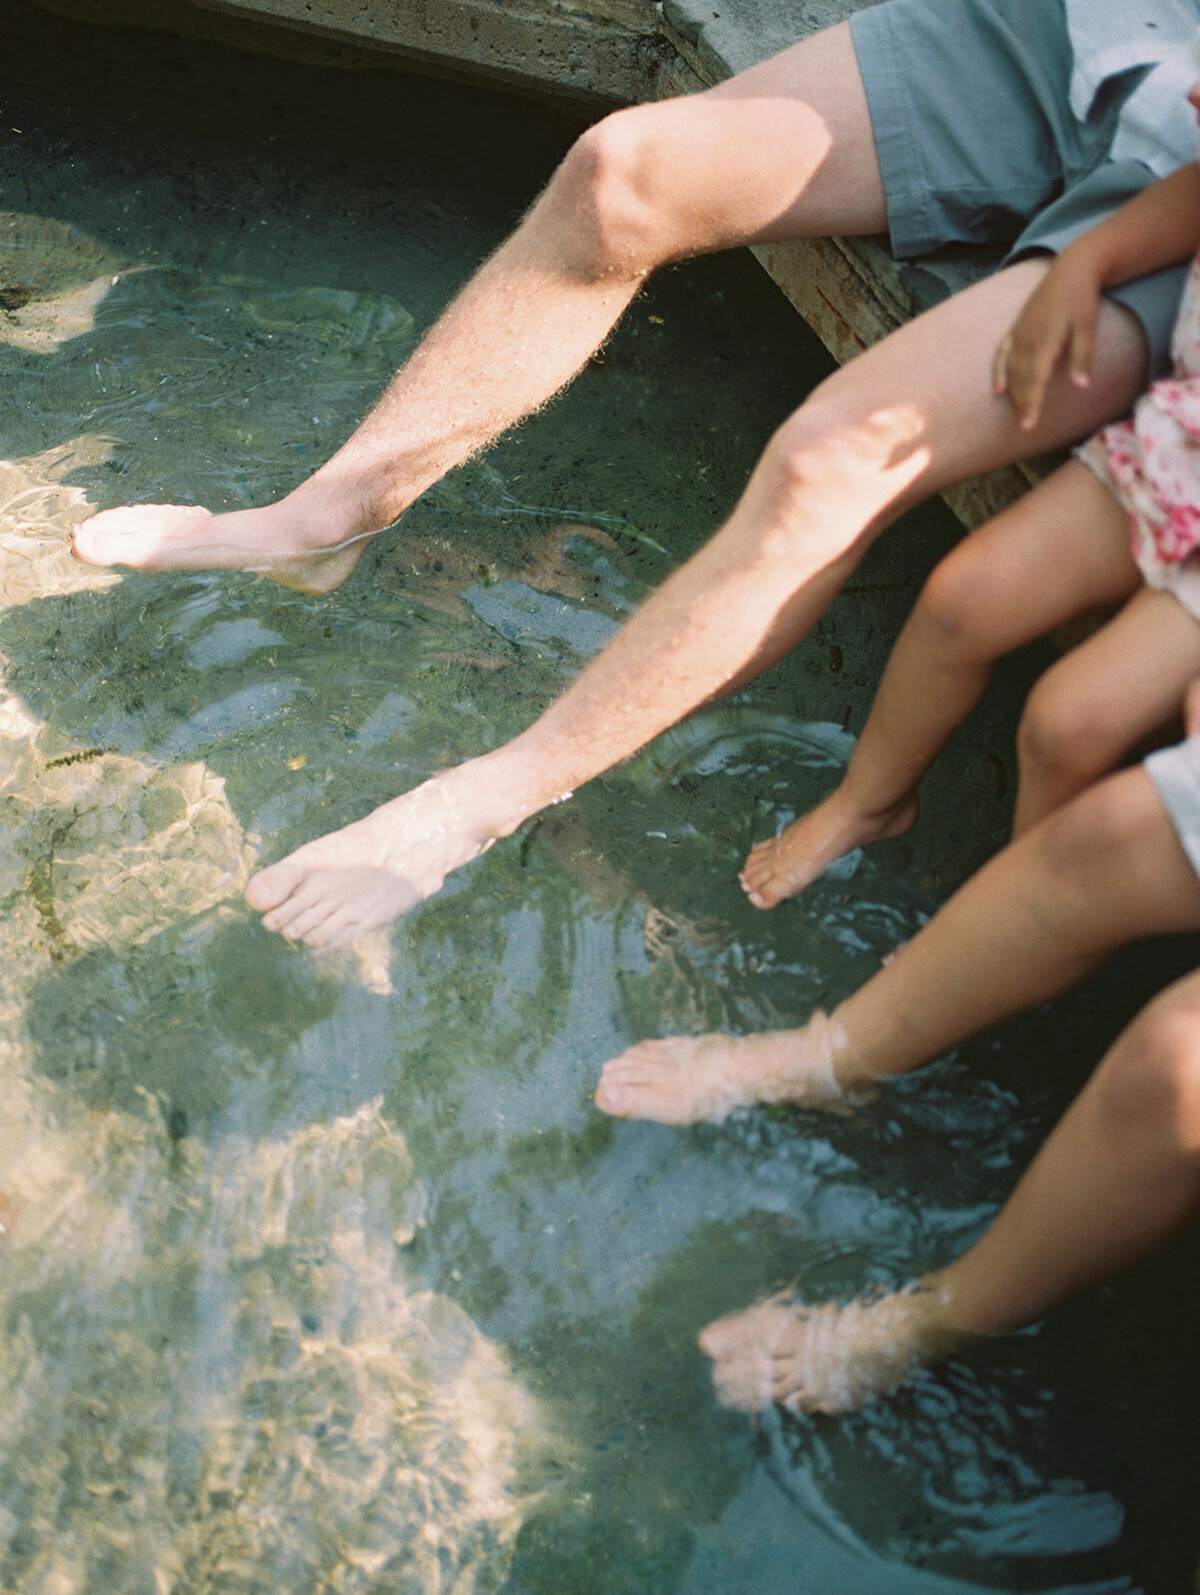 Three sets of feet dip in a fountain.